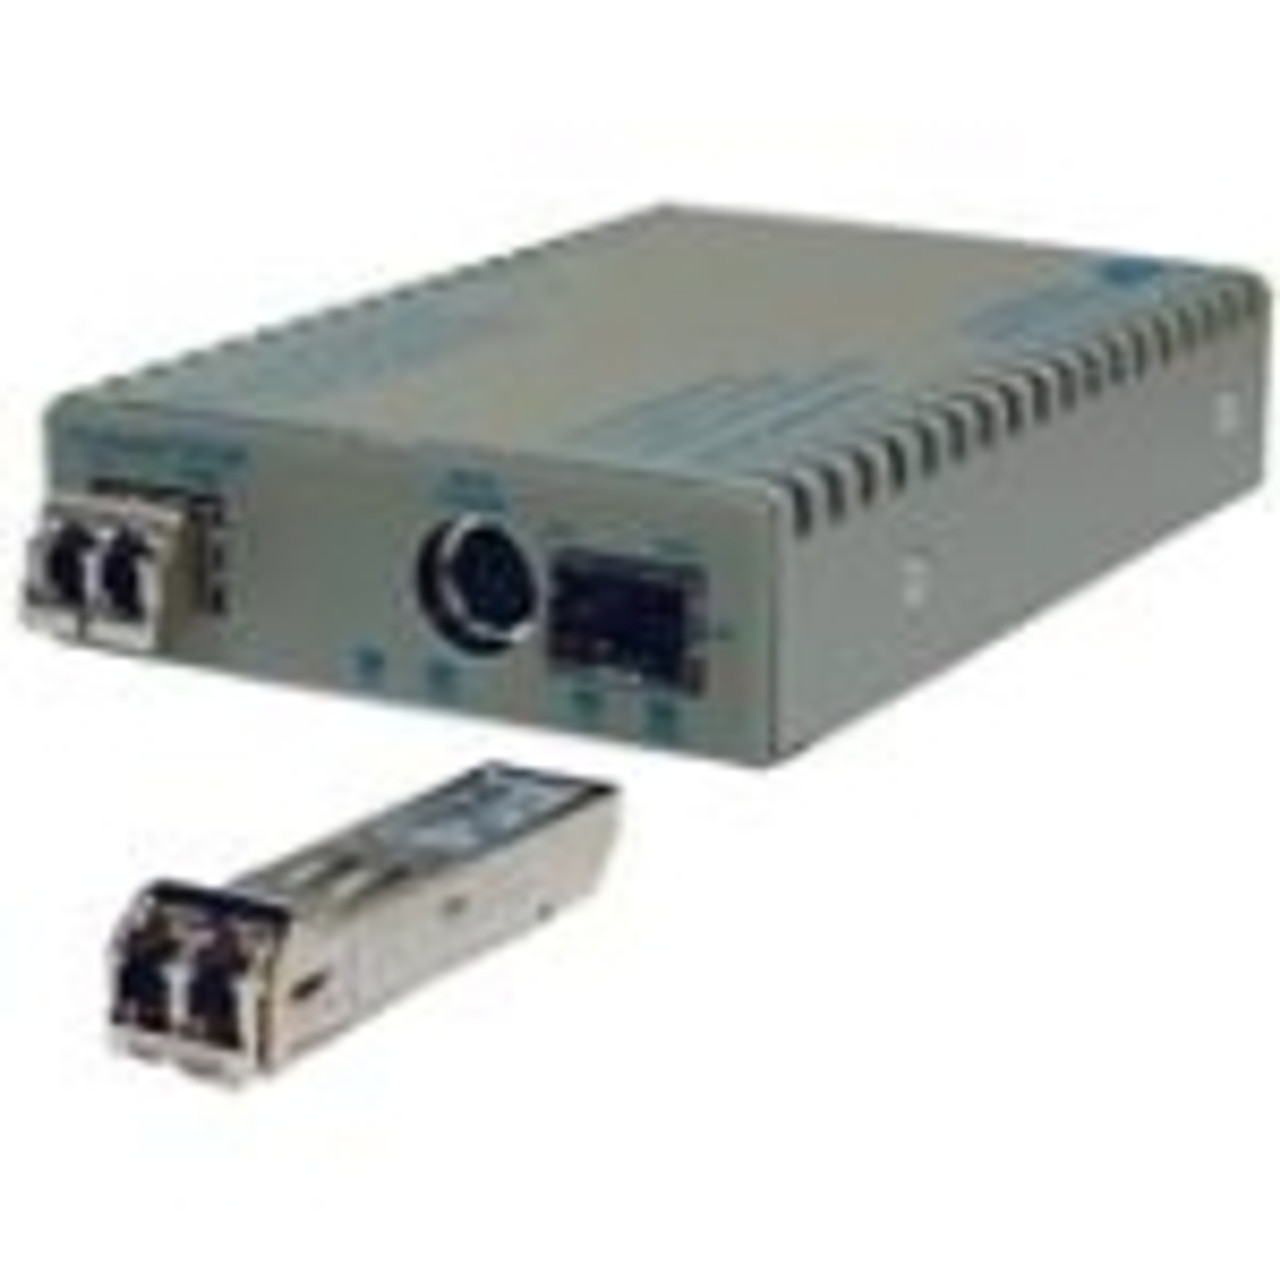 7539-1 Omnitron Systems CWDM XFP Module 1 x 10GBase-X10 Gbit/s